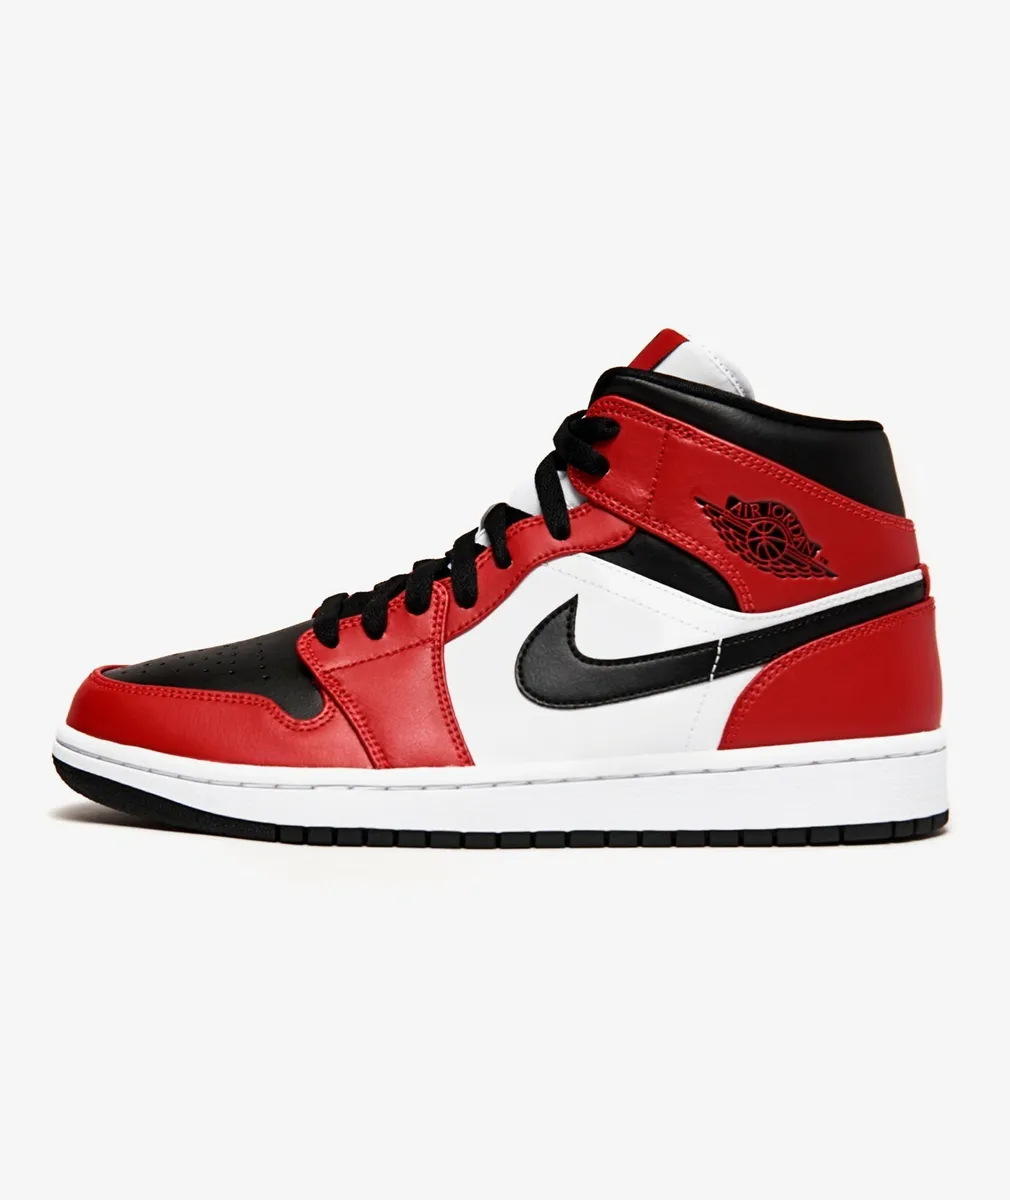 angustia Sentimental Perforar Nike Air Jordan 1 Retro Mid Chicago Toe Red White Black 554724-069 3 4 6 11  BRED | eBay